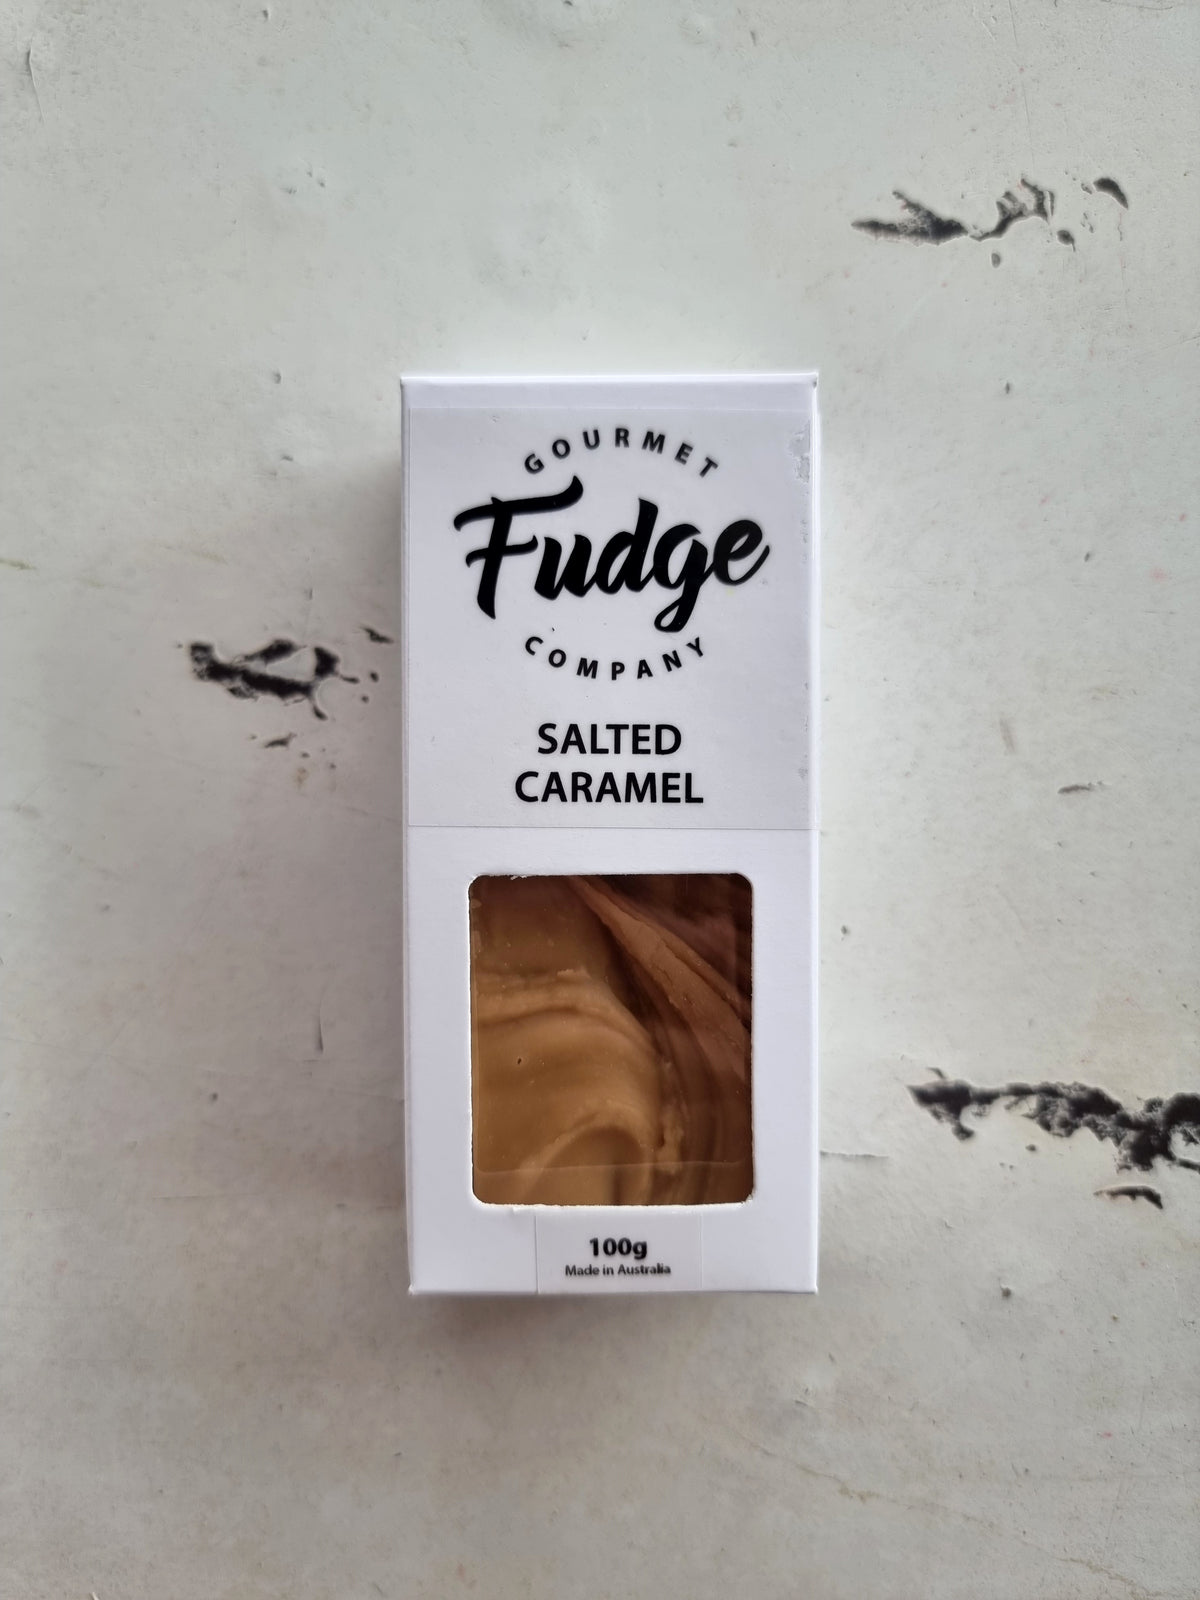 Fudge 100g - Gourmet Fudge Company